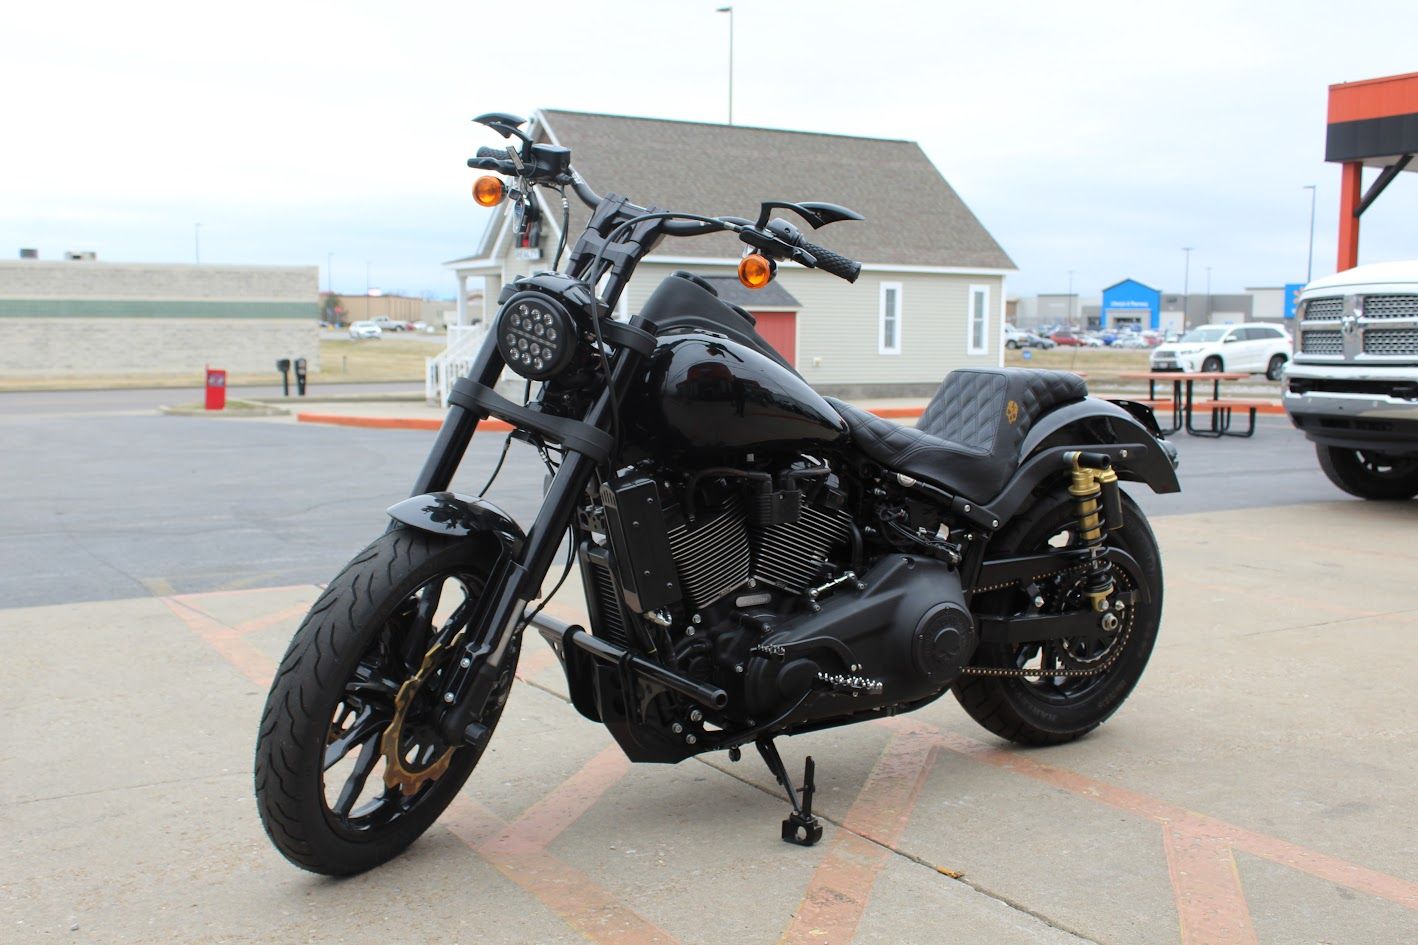 2020 Harley-Davidson Low Rider® in Marion, Illinois - Photo 2